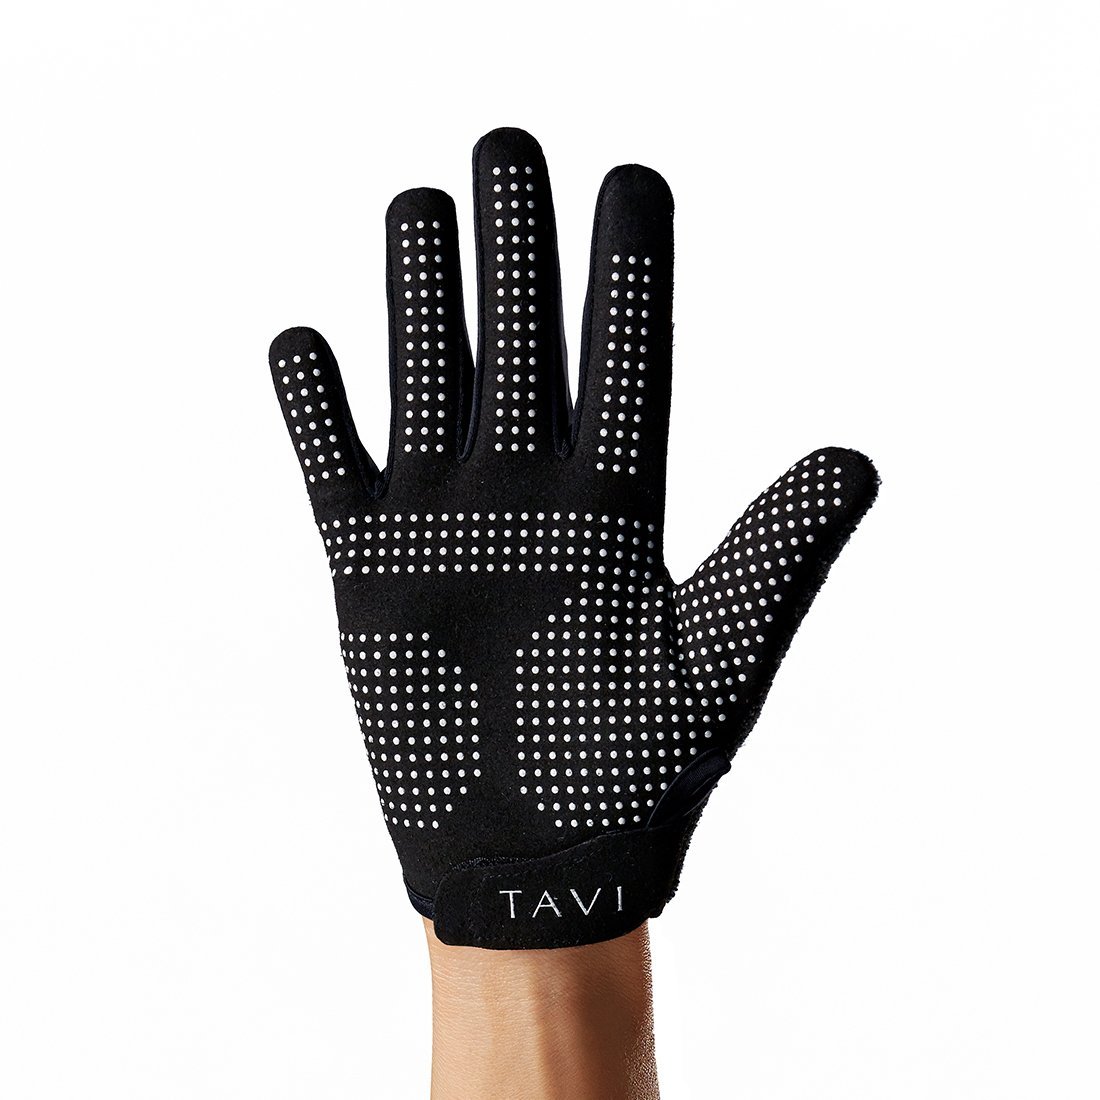 tavi_gloves_full_coverage_training_glove_back-1100x1100_2.jpeg